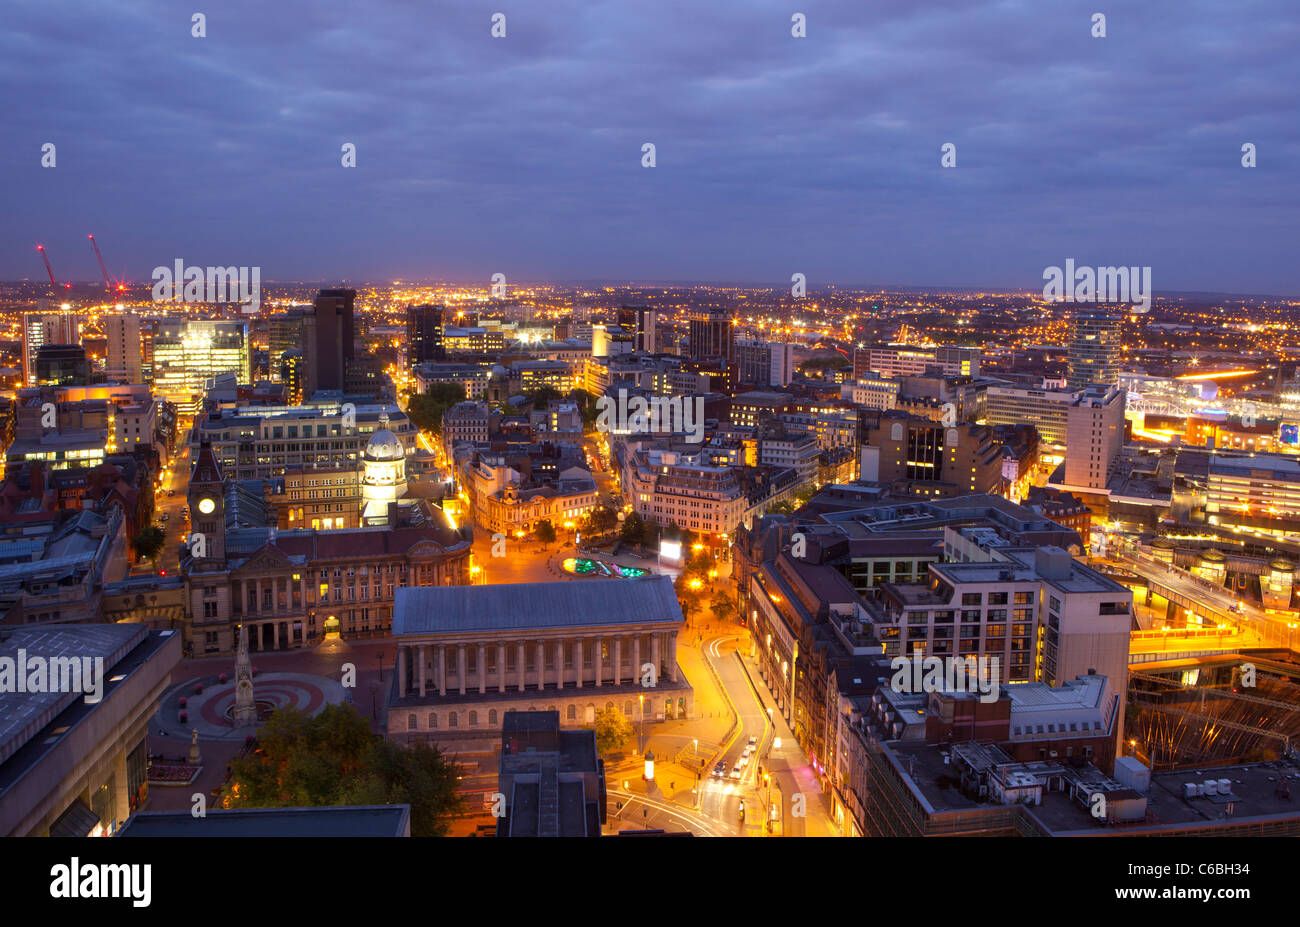 Cityscape of Birmingham city centre at night, England, UK Stock Photo